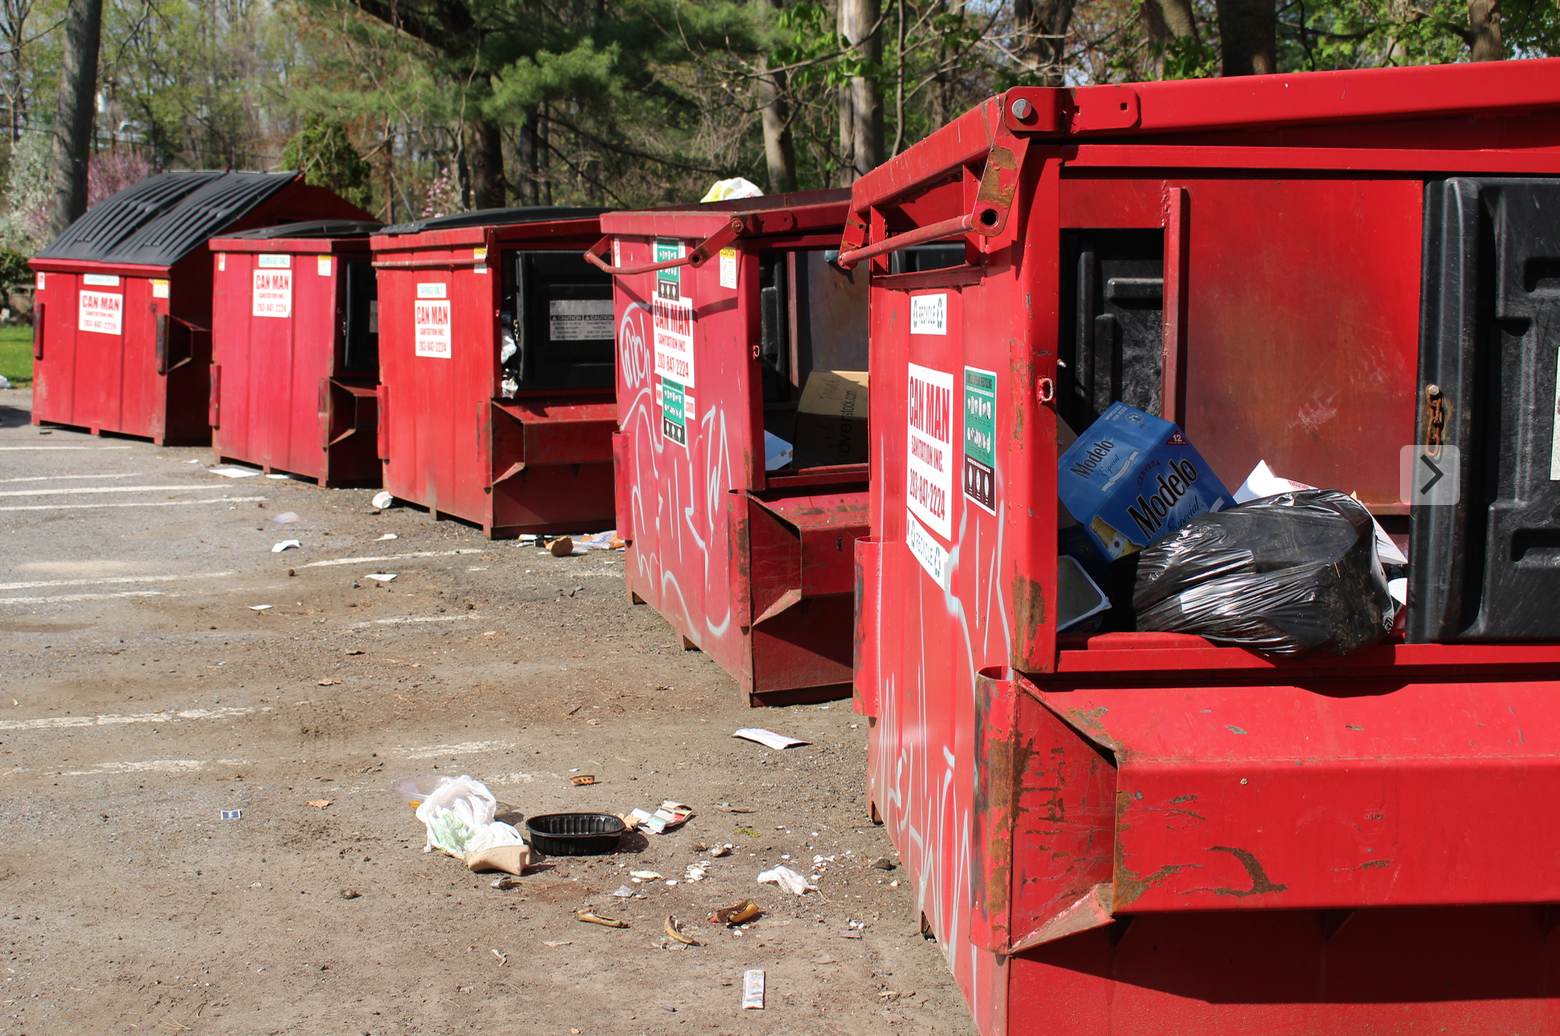 Dumpsters at Wilbur Peck, summer 2015. Photo: Leslie Yager